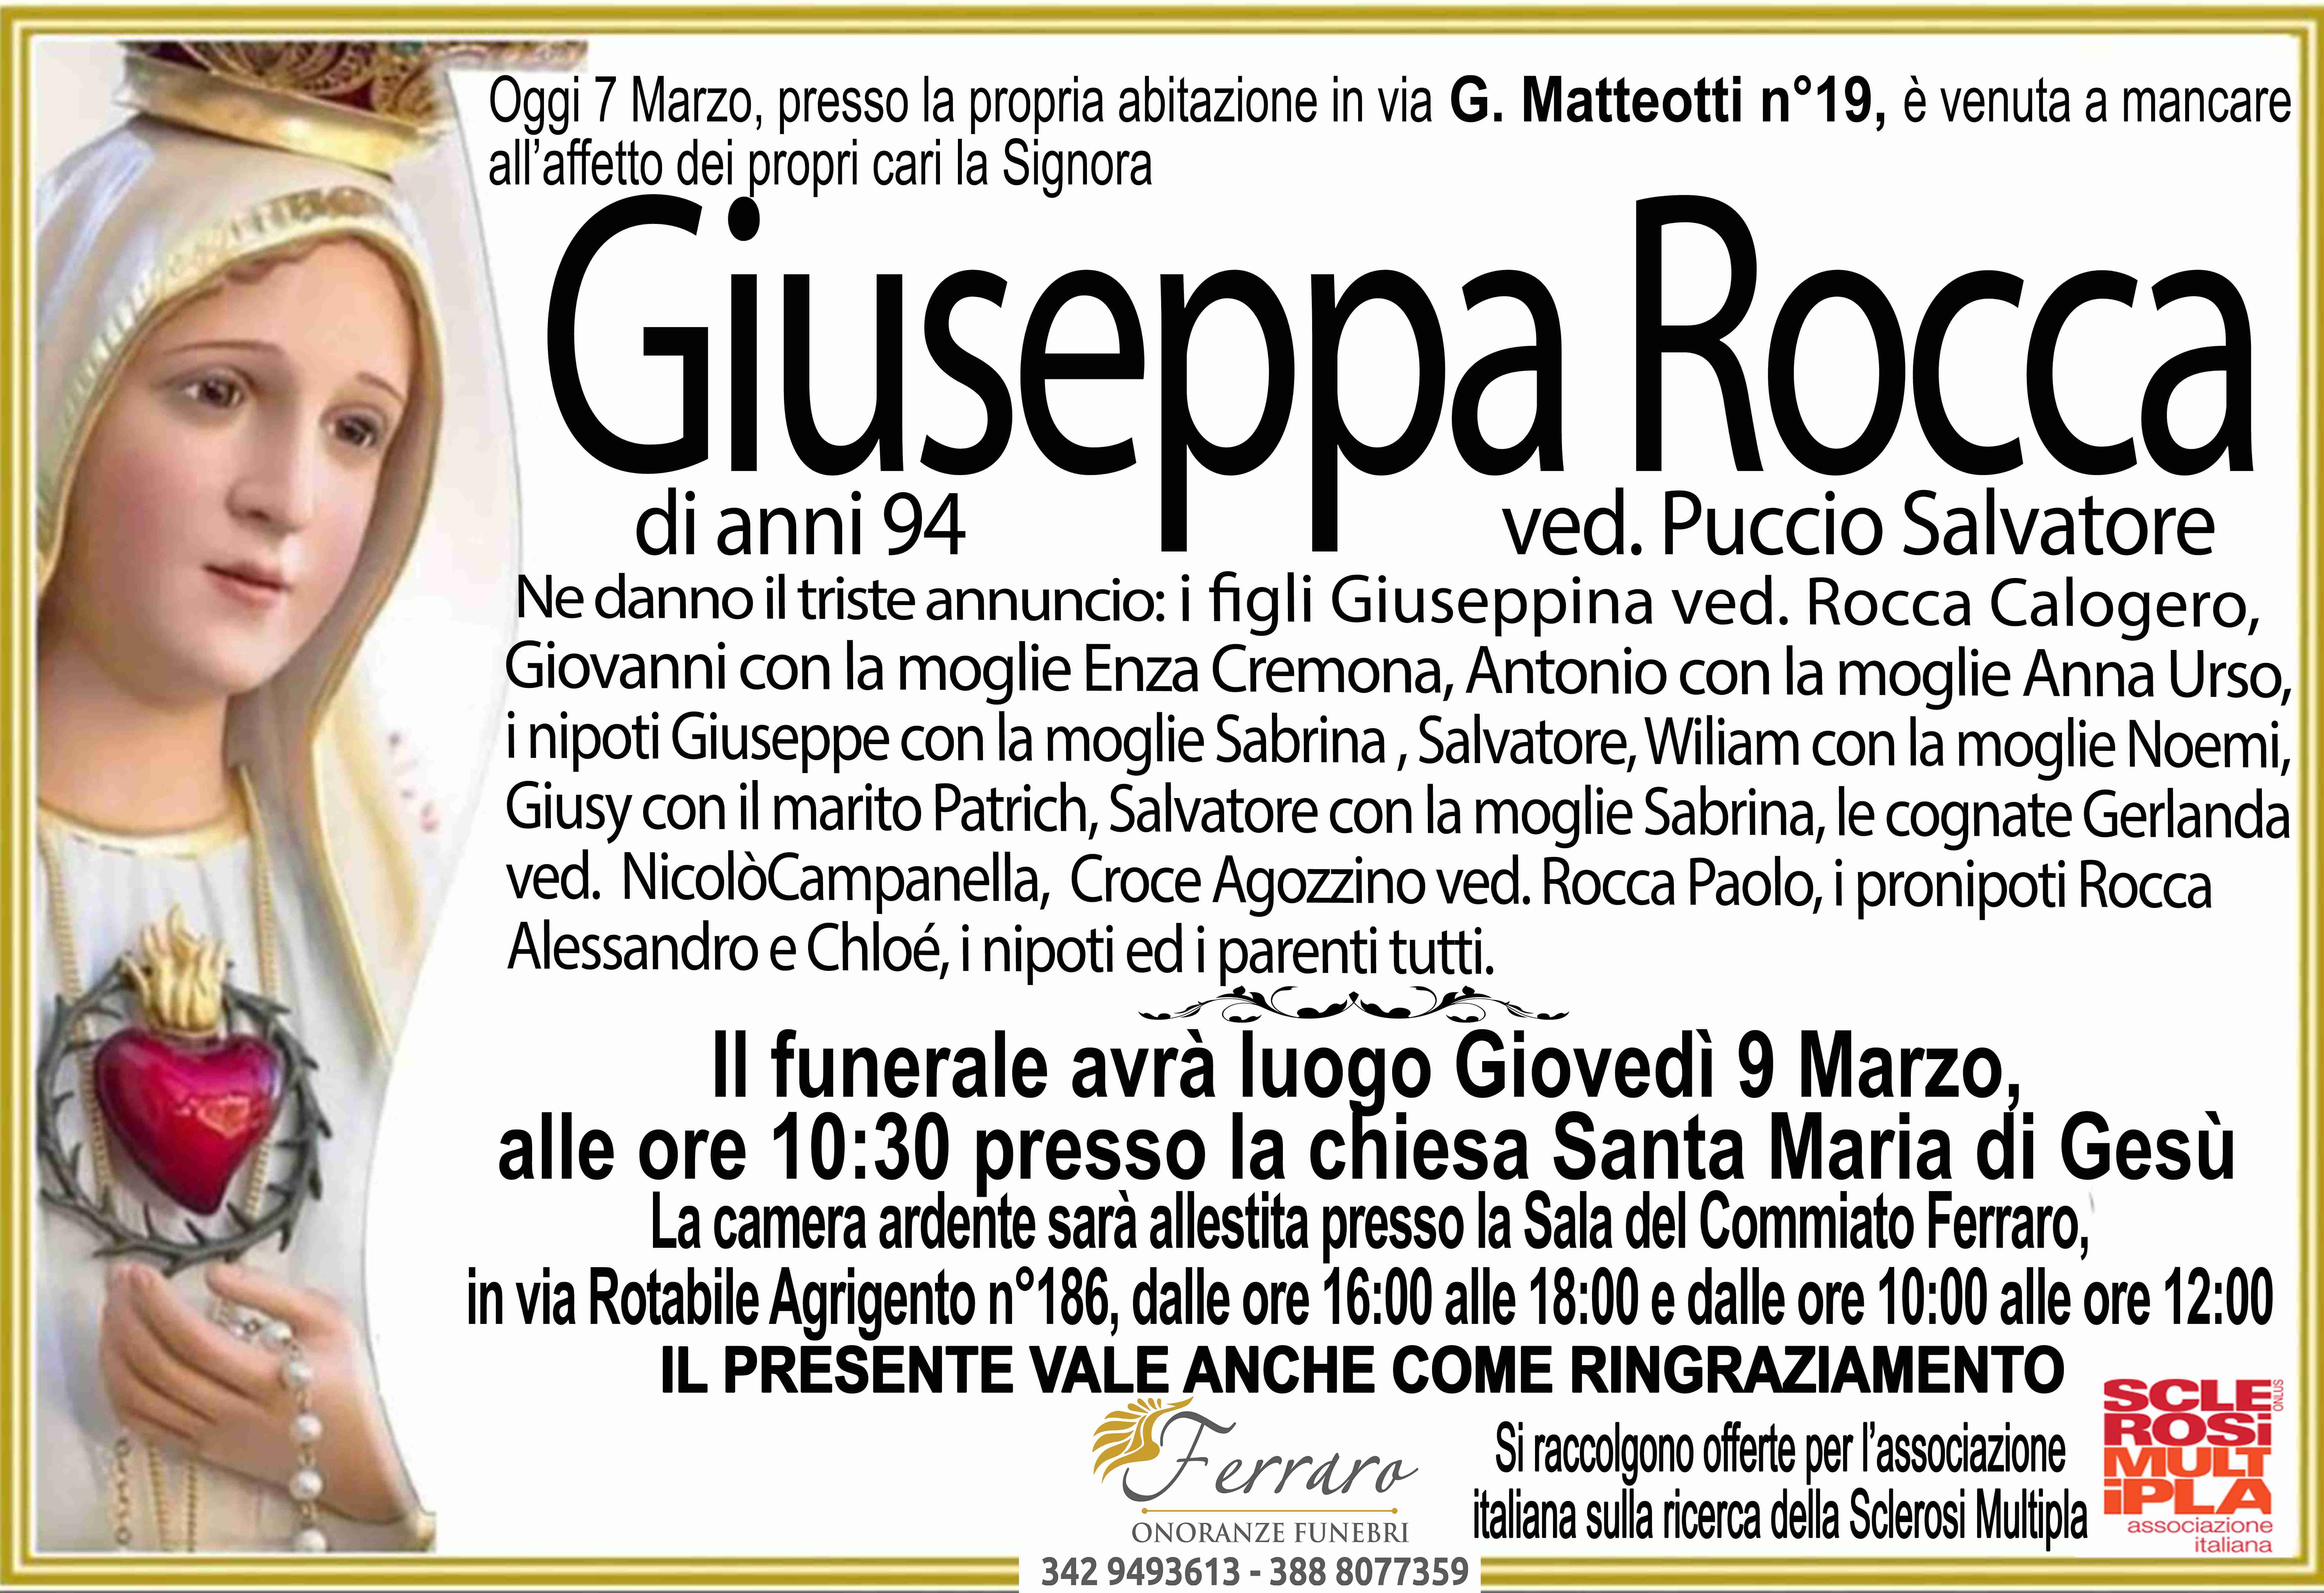 Giuseppa Rocca